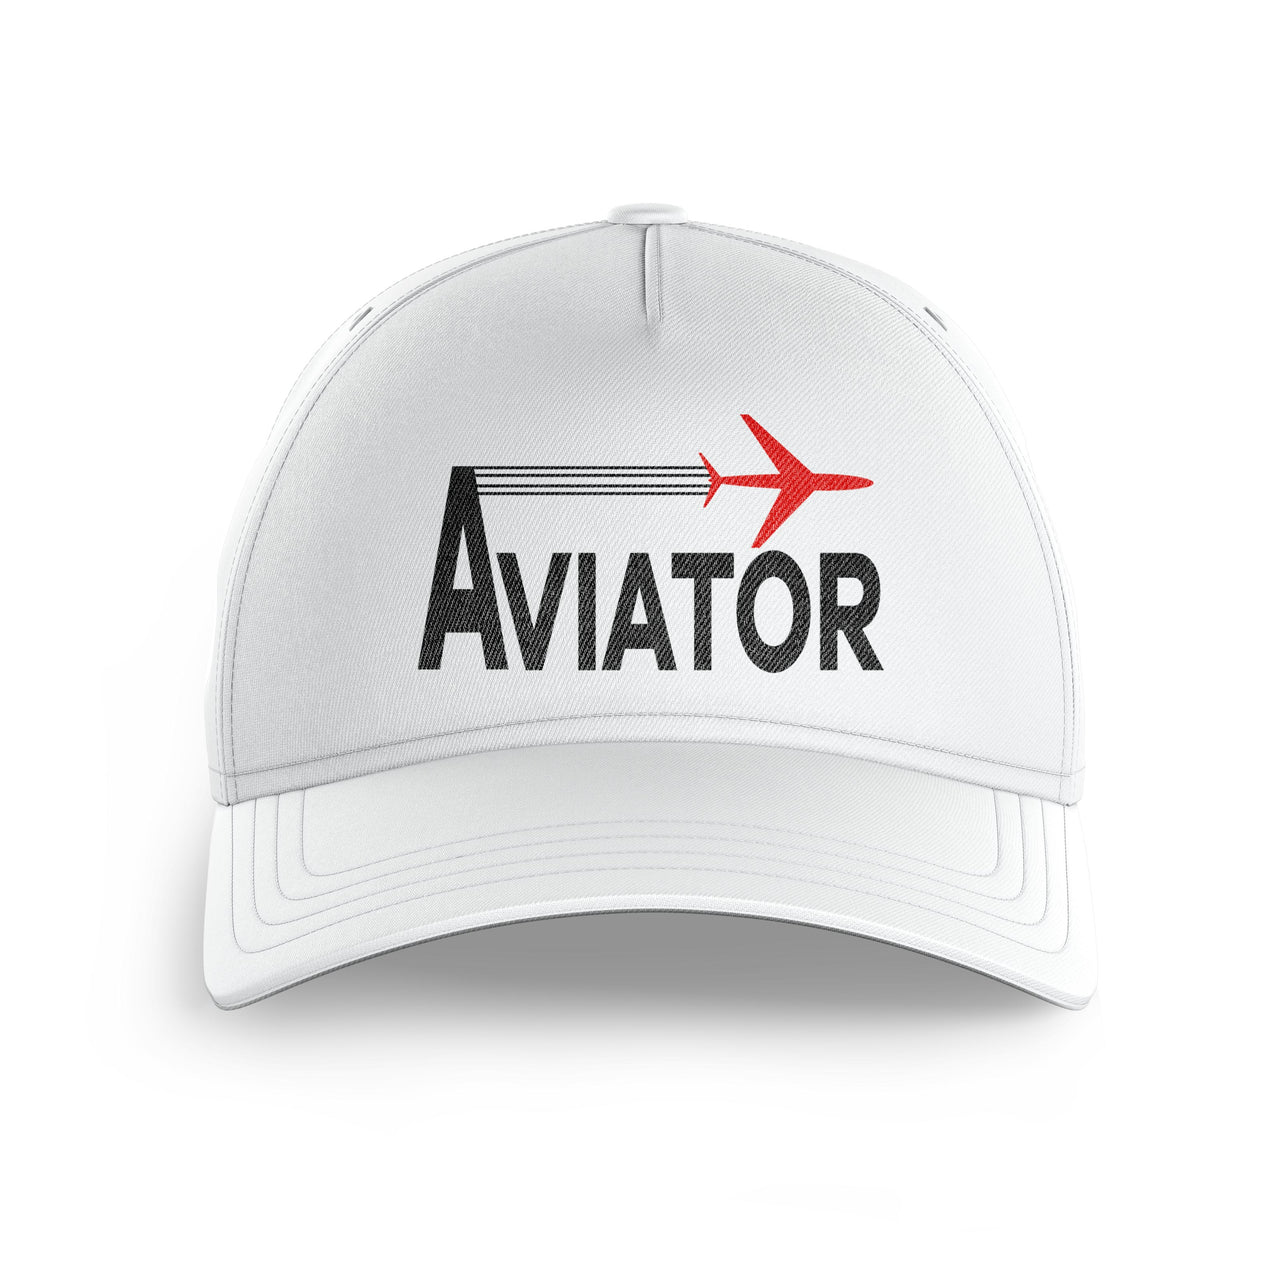 Aviator Printed Hats